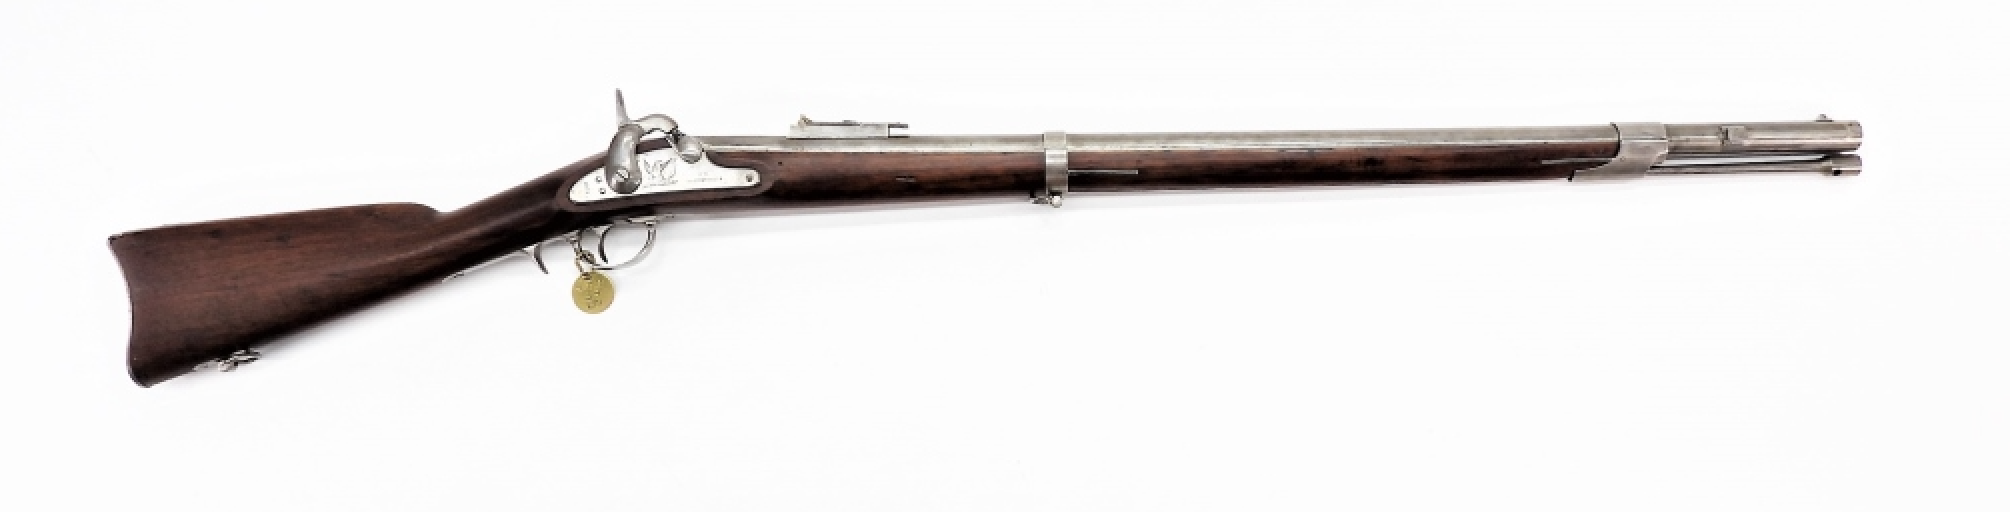 Civil War-era Whitney U.S. Navy Model 1861 Plymouth rifle, estimated at $2,000-$4,000 